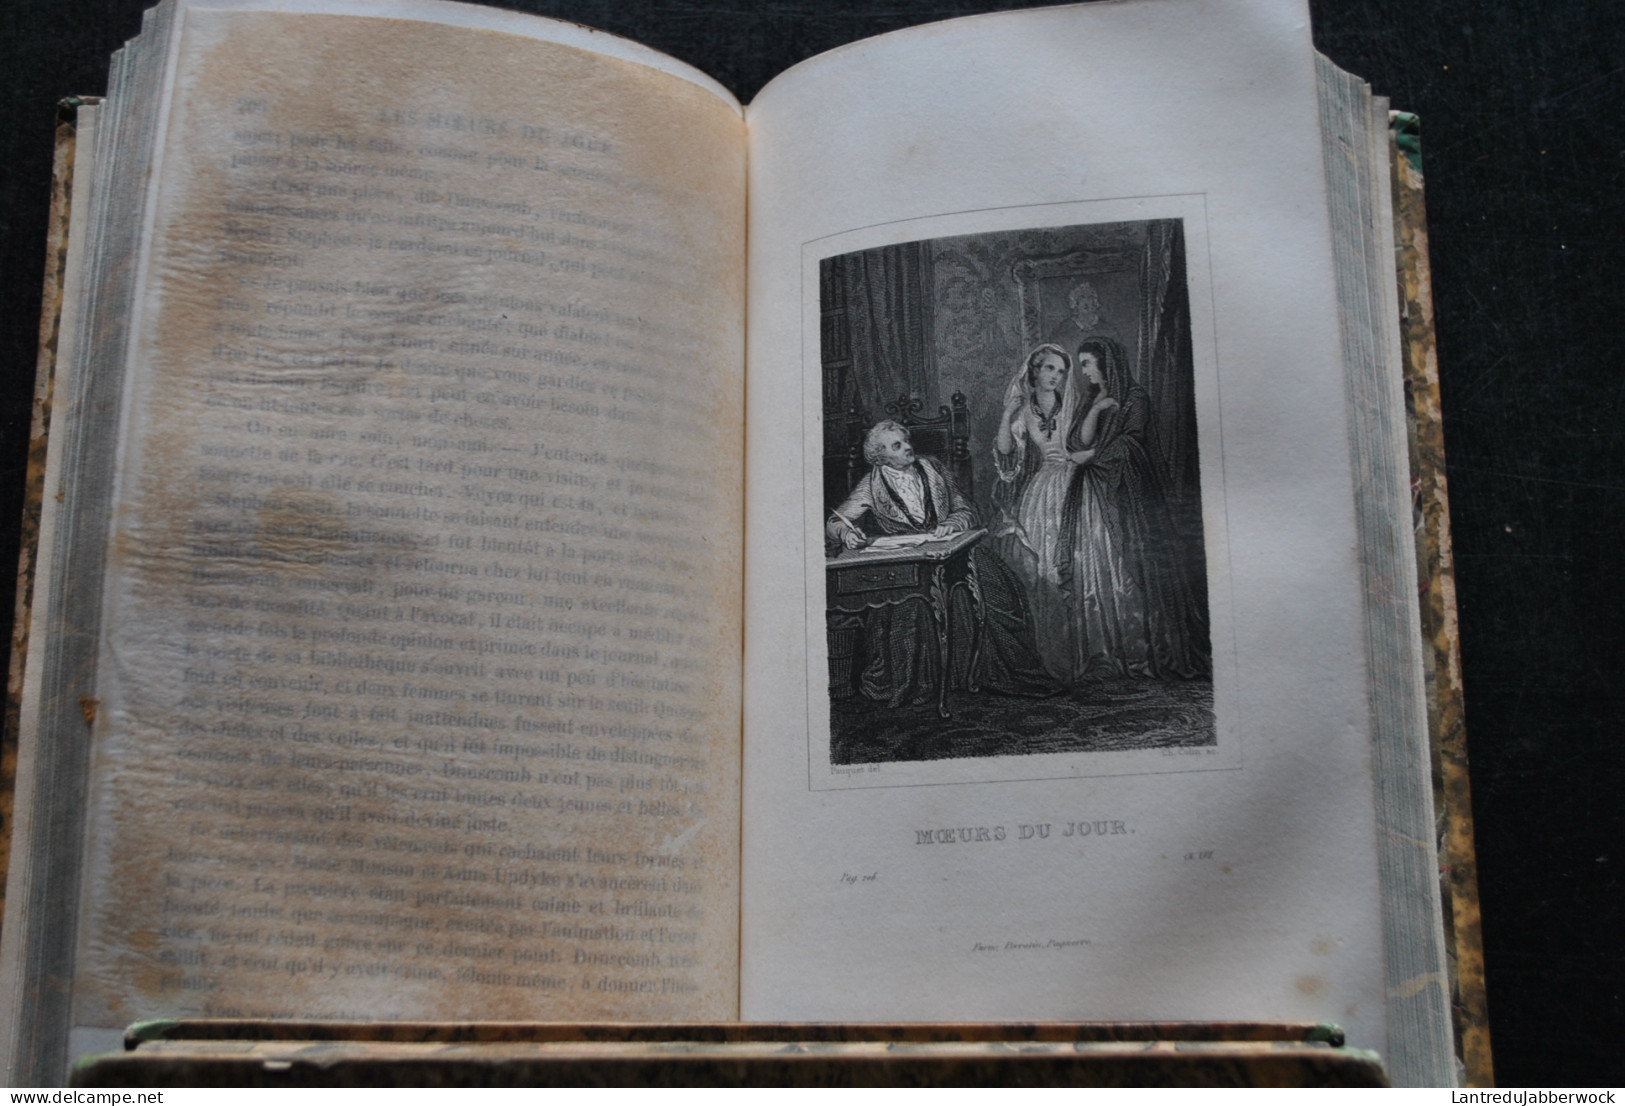 Oeuvres de James Fenimore Cooper Traduction DEFAUCONPRET 1830 - 1852 - INCOMPLET 27/30 VOLUMES reliures cuir